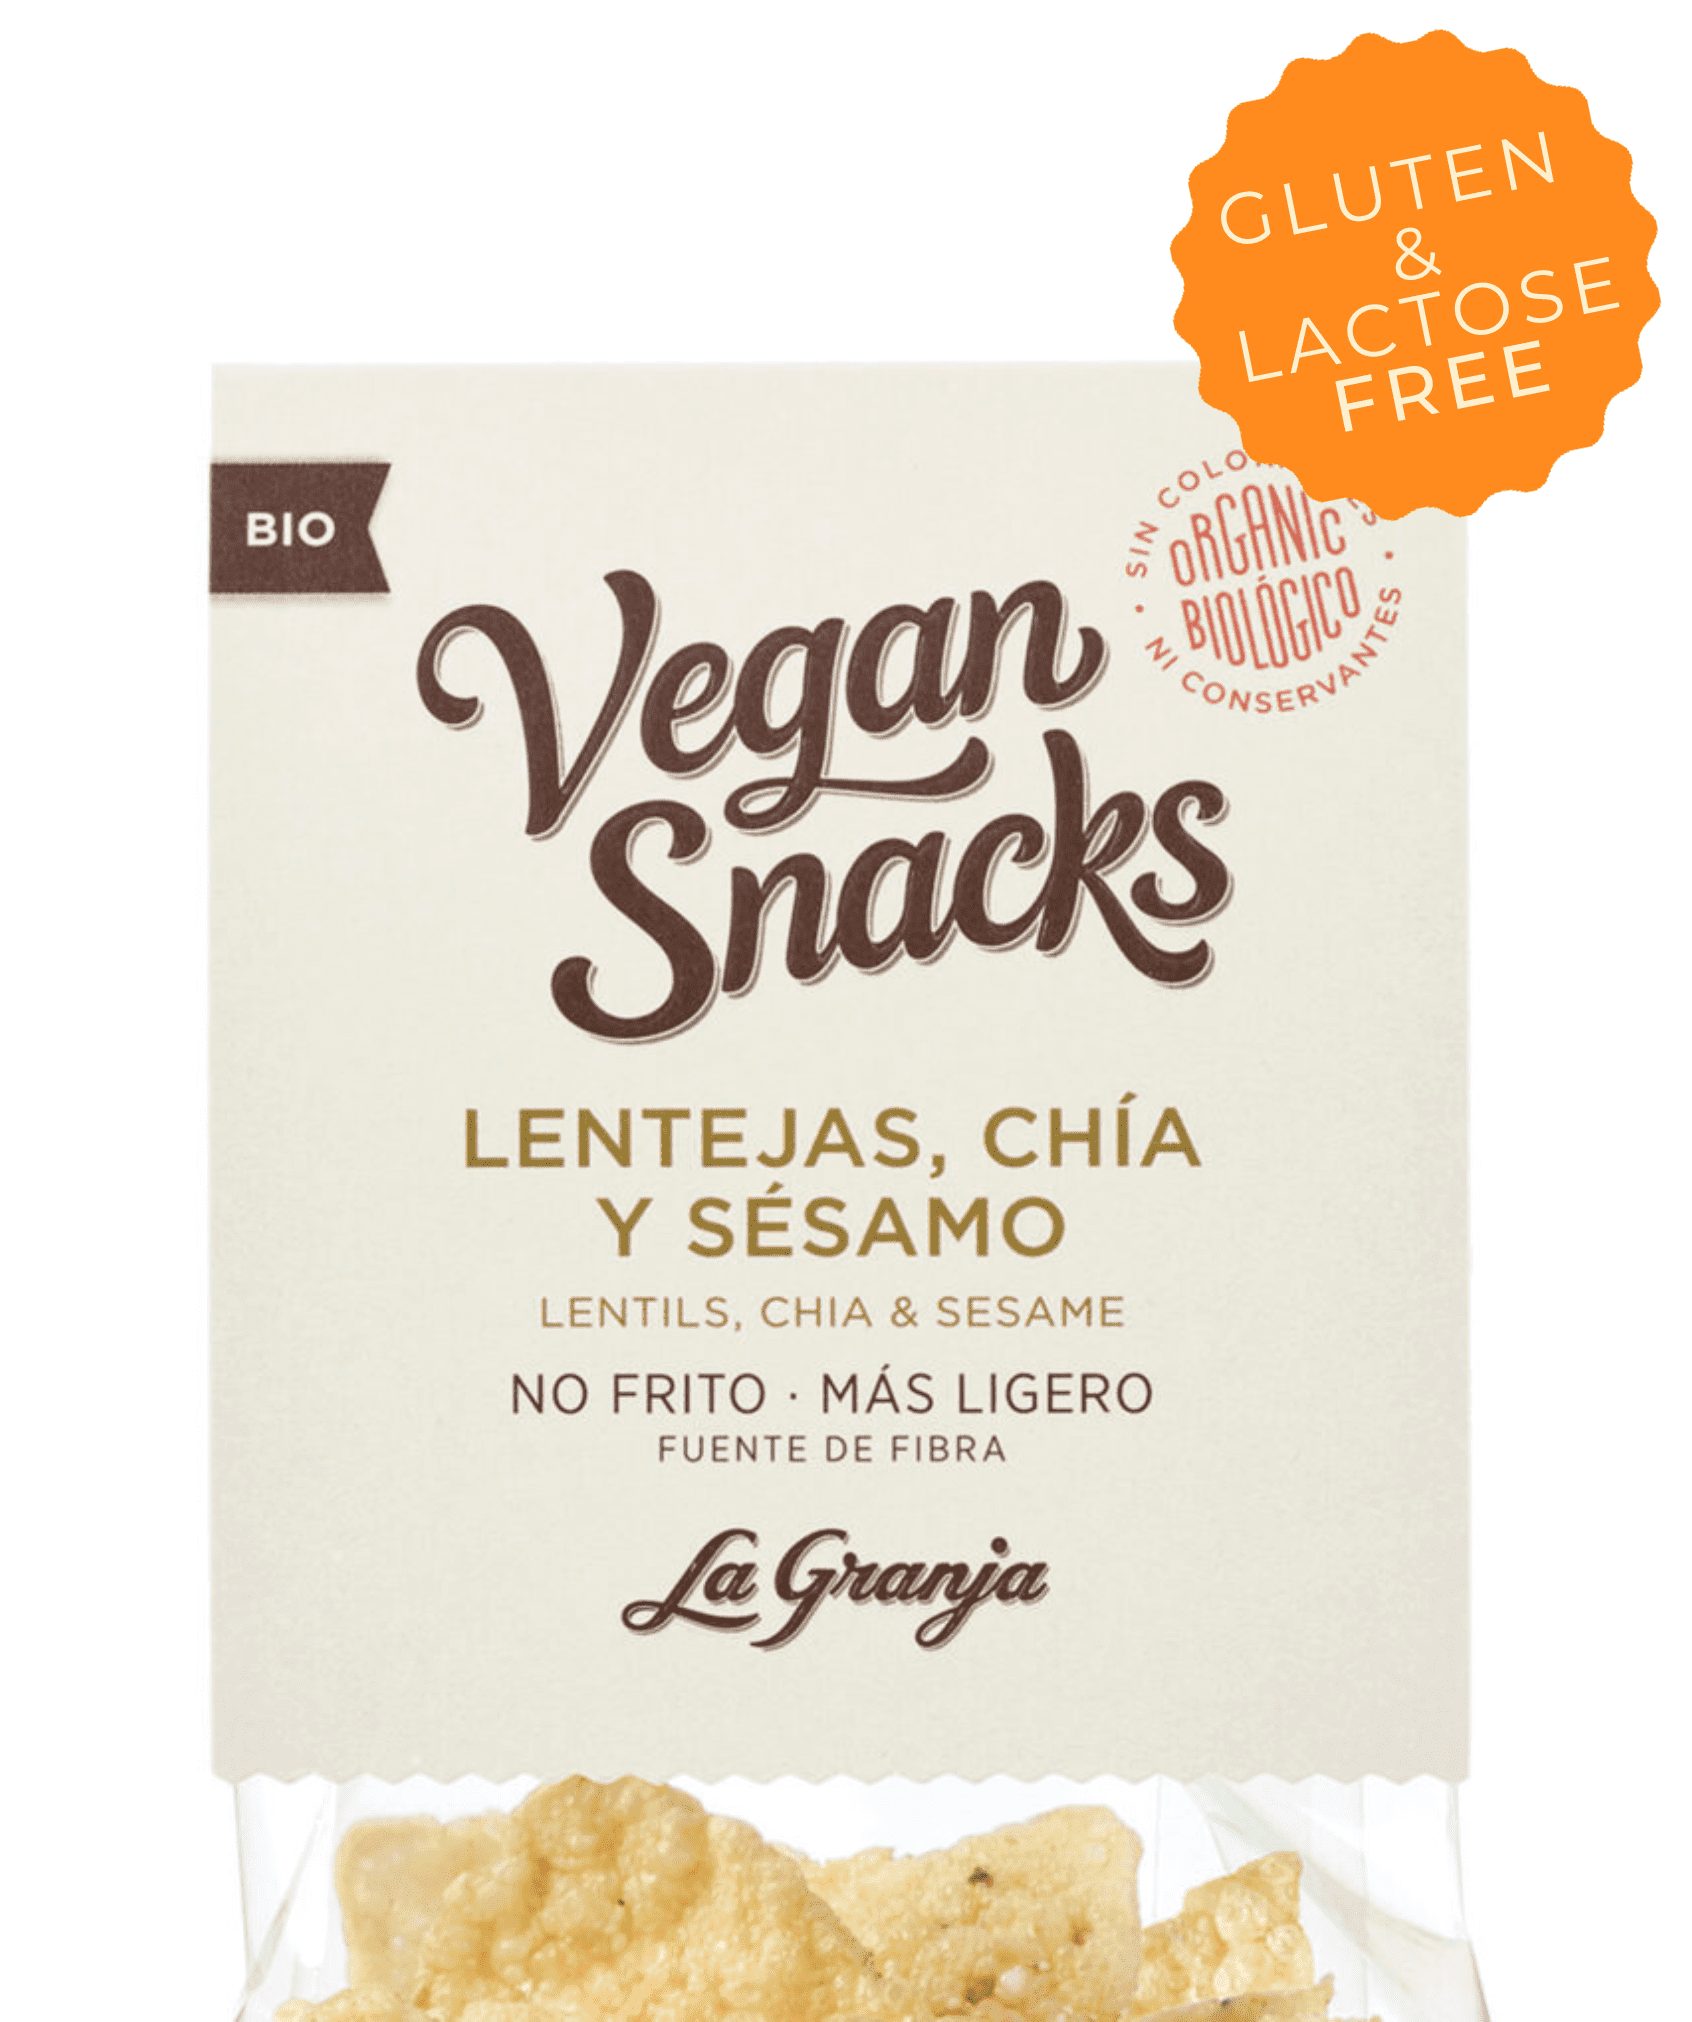 Vegan snacks lenteja, chía y sésamo